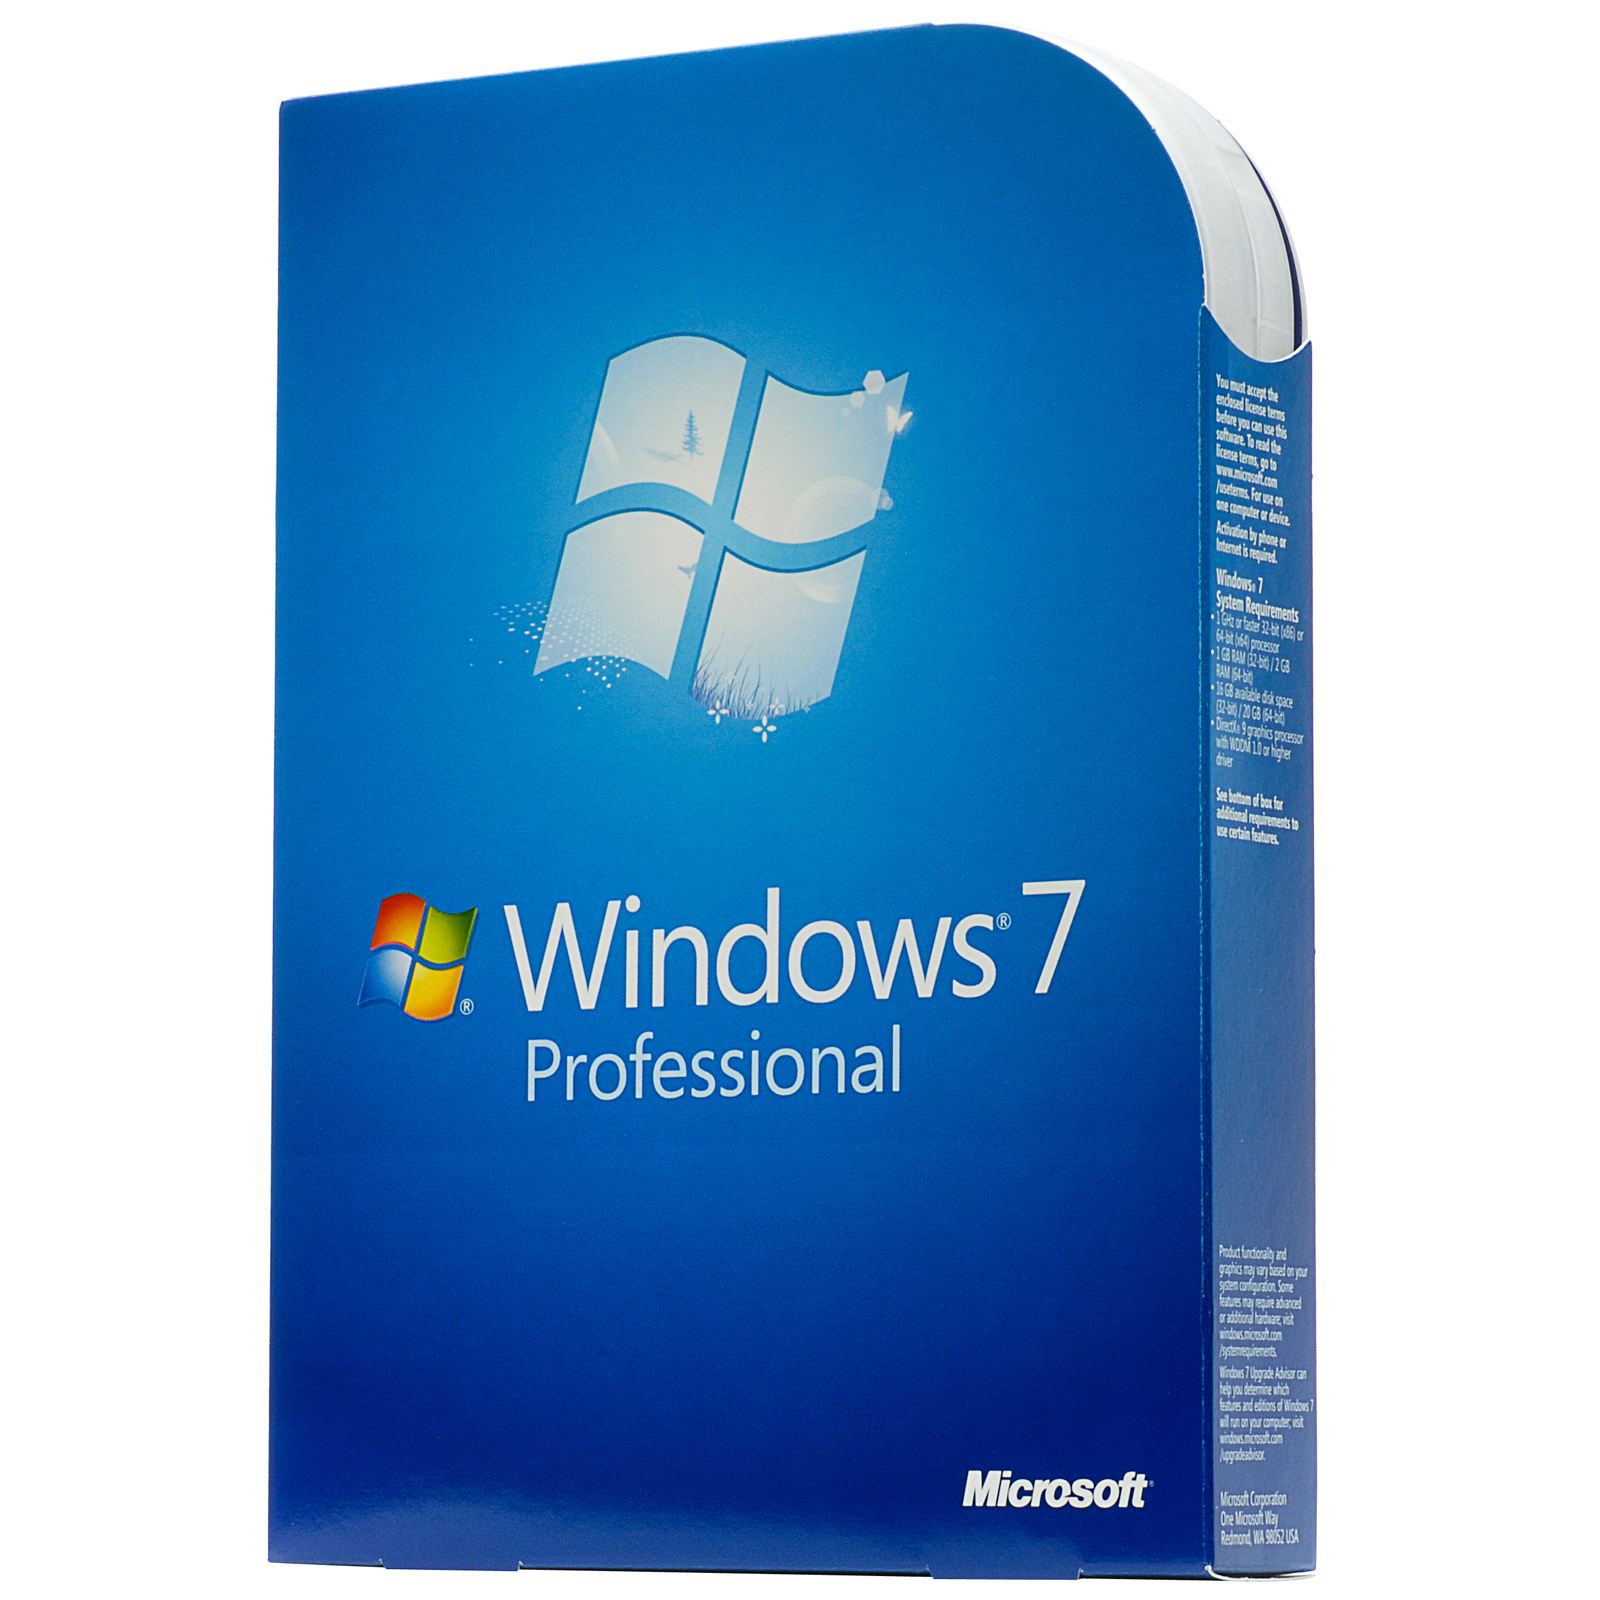 Windows vista ultimate 32 bit full tek link indira